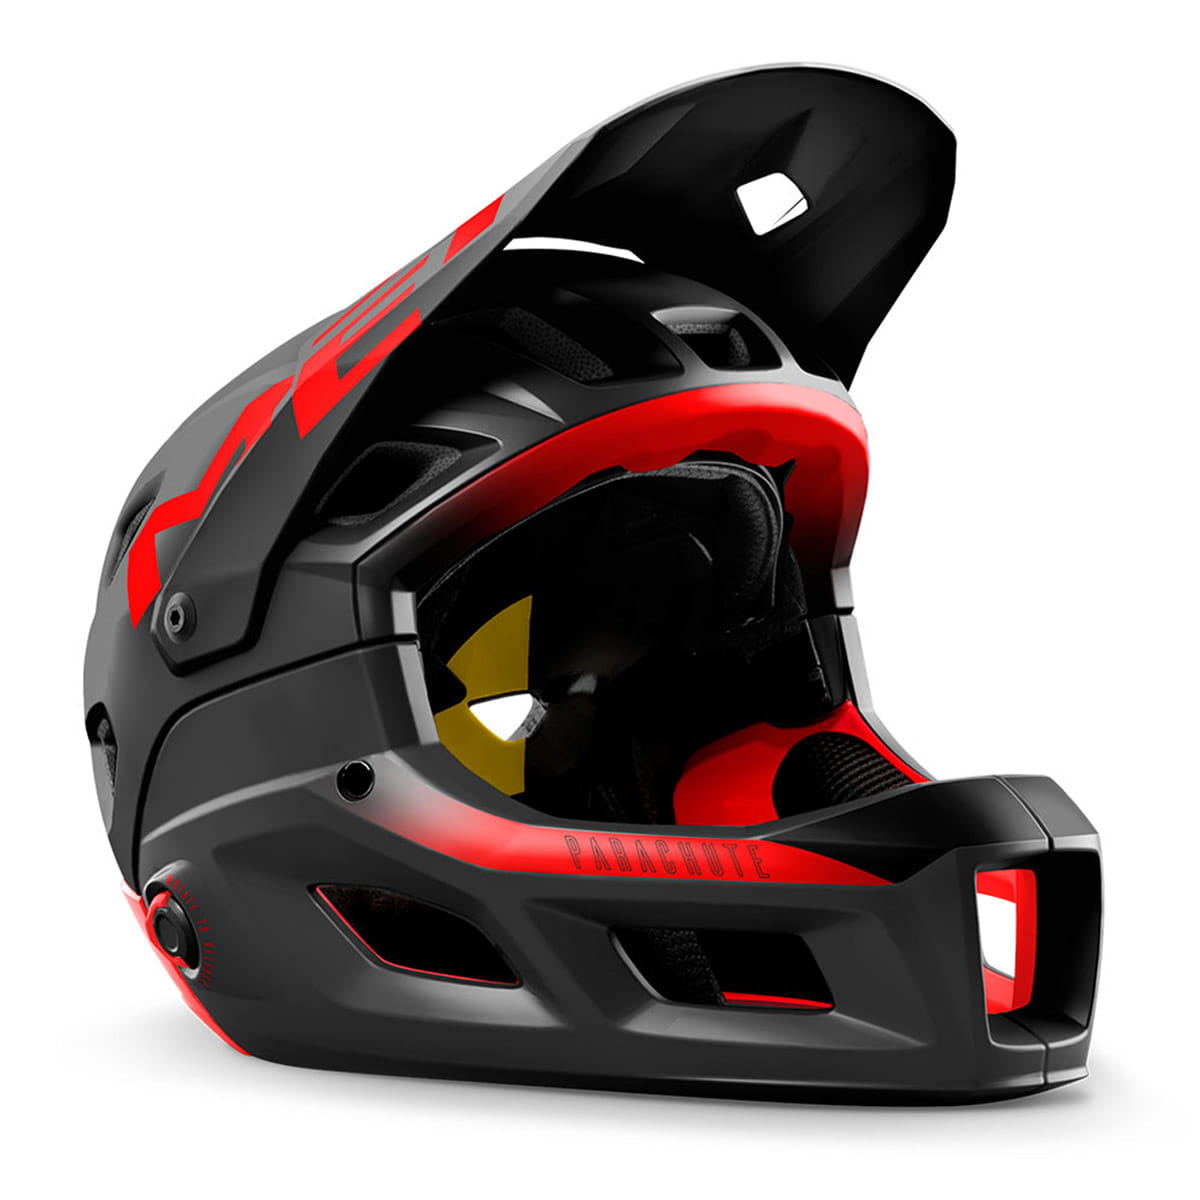 MET Parachute MCR MIPS Fullface Helmet with detachable chin bar